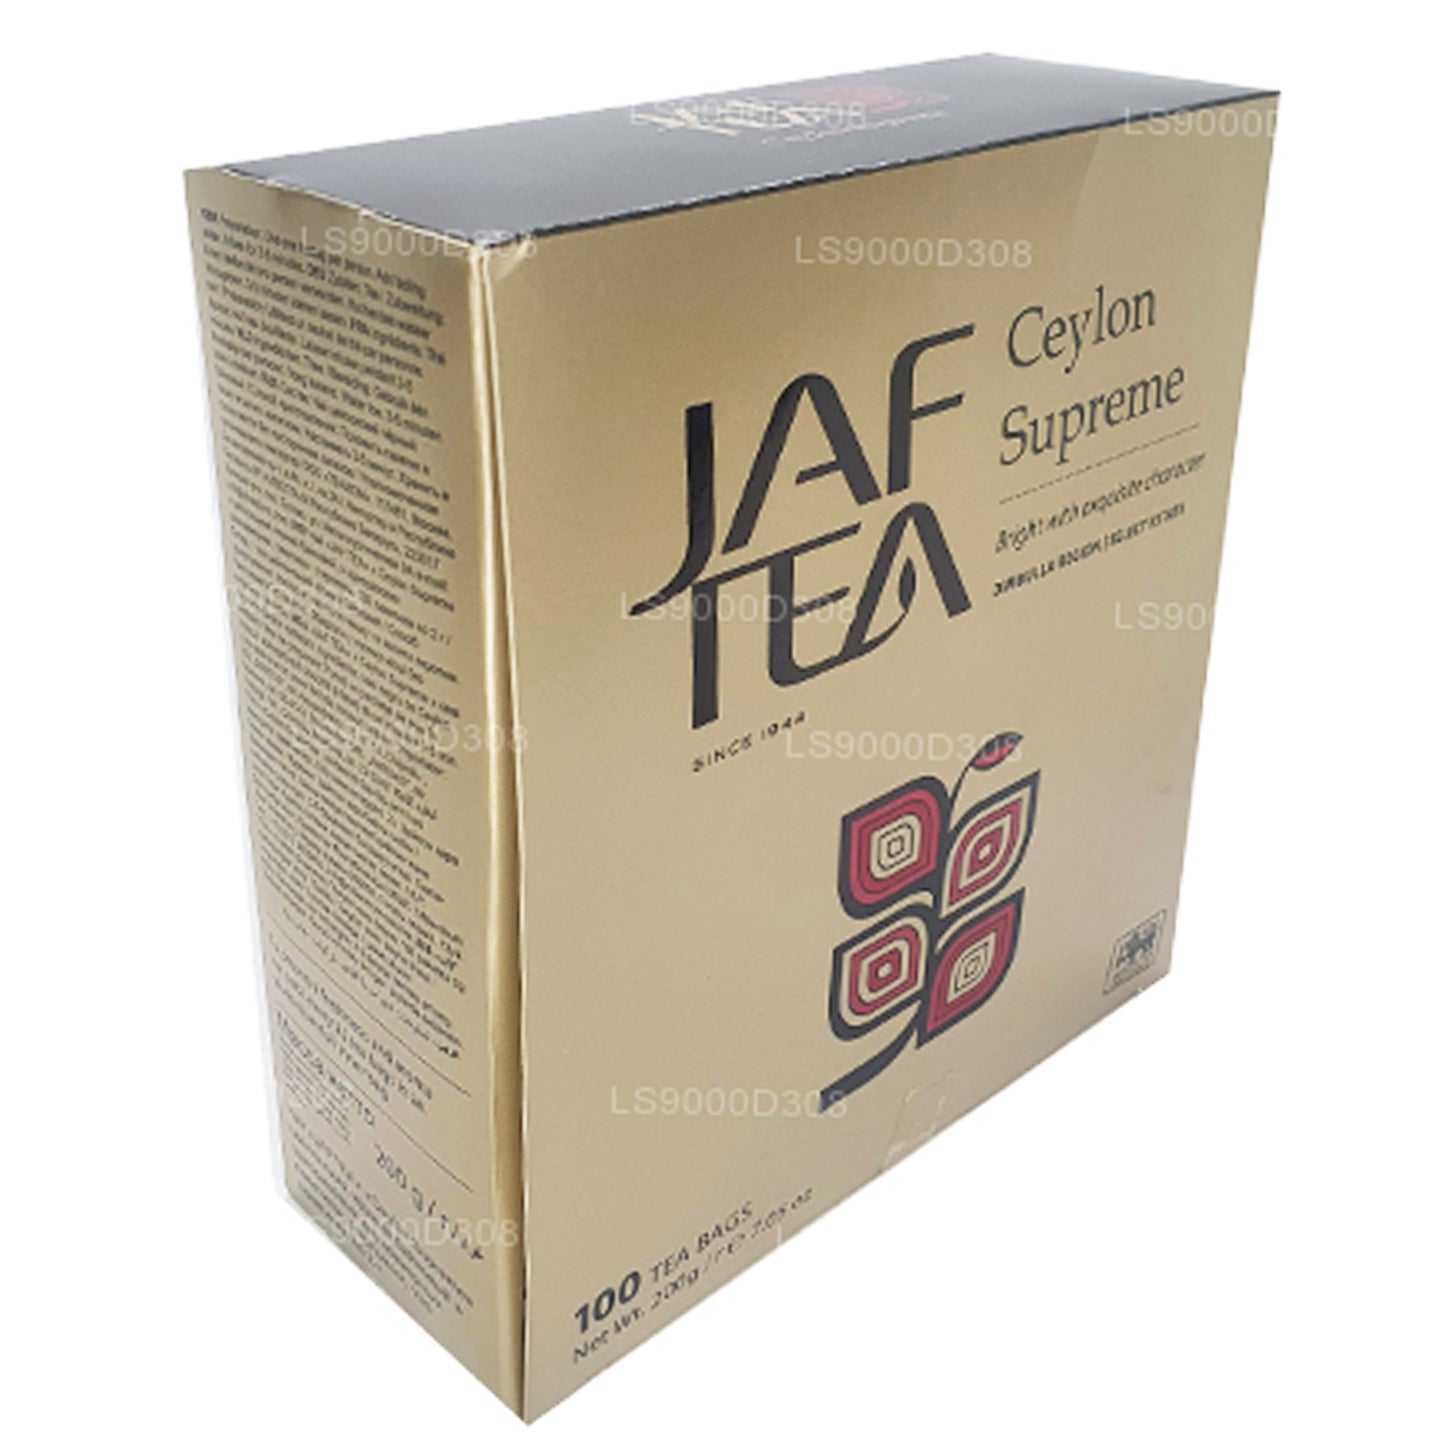 Jaf Tea Classic Gold Collection Ceylon Supreme (200g)